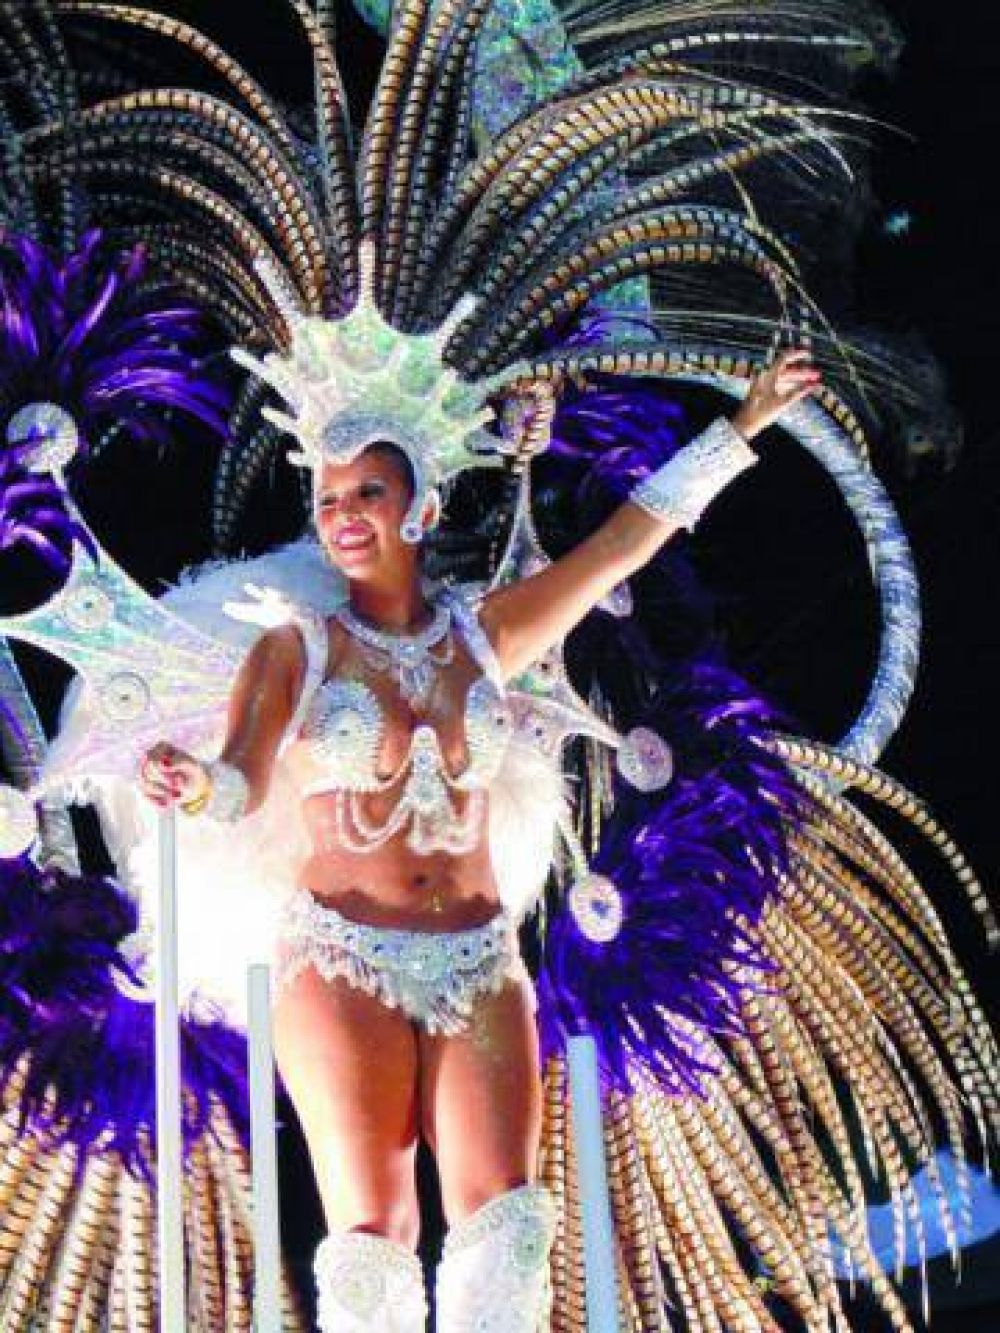 Comparsa Imperio campeona del Carnaval 2015